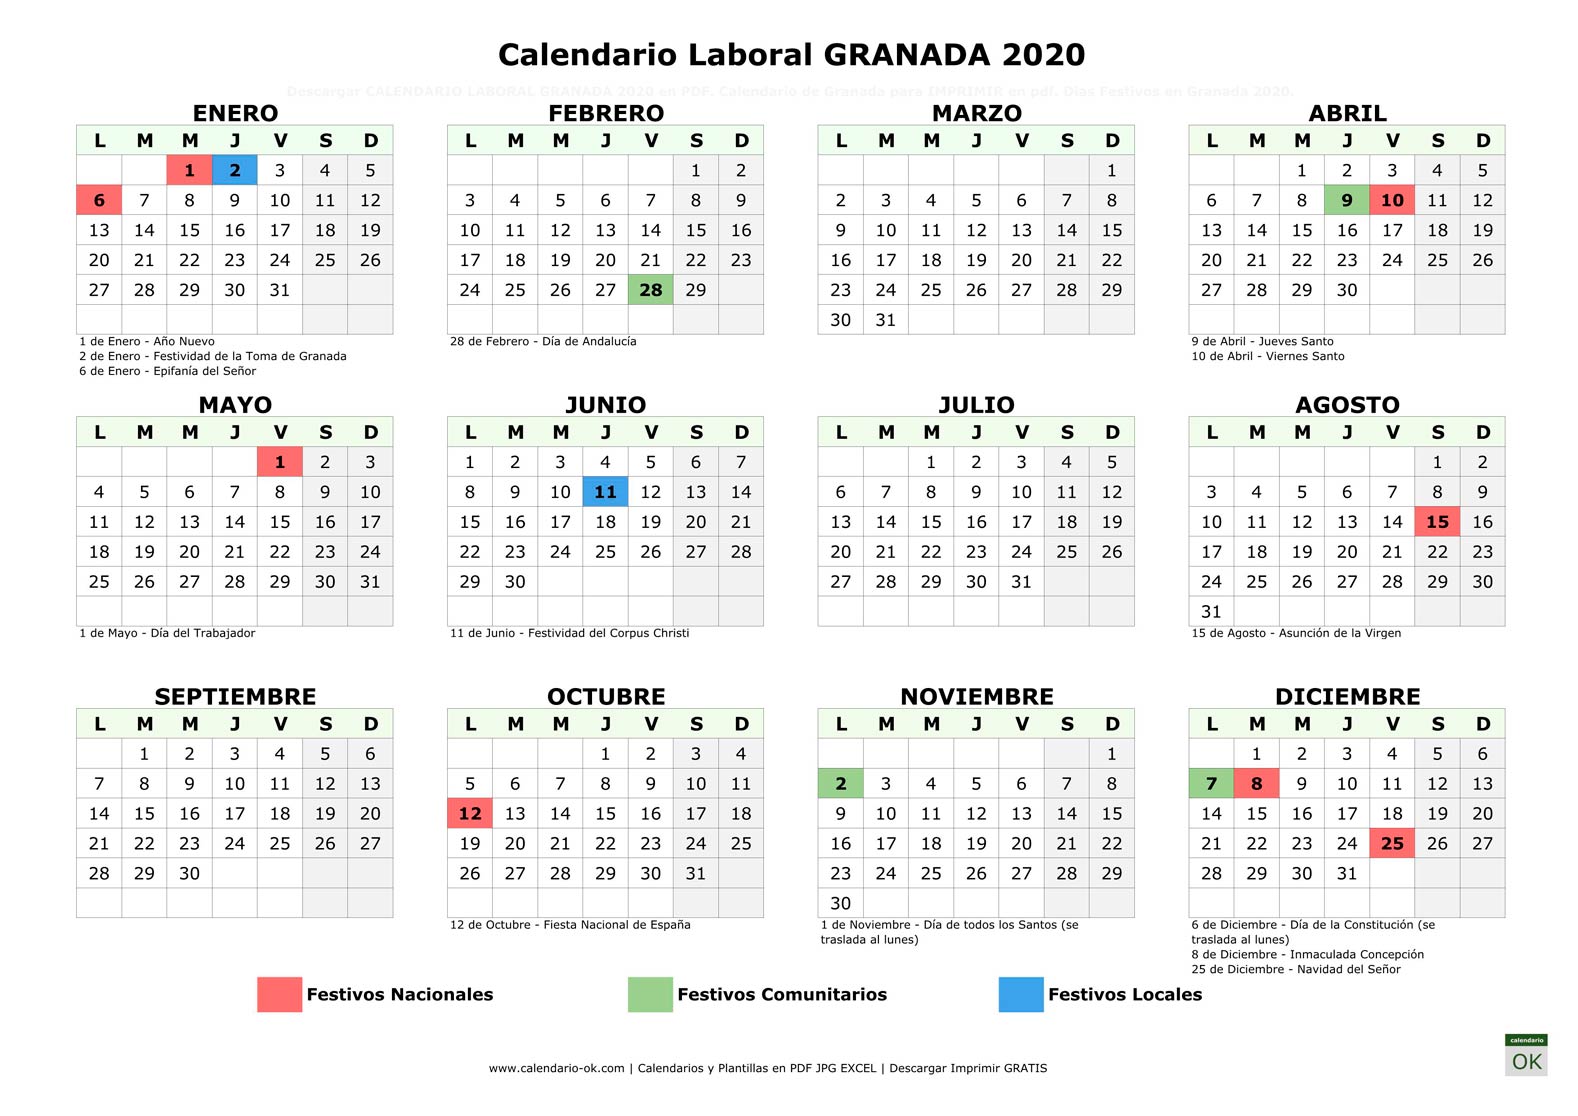 Calendario Laboral GRANADA 2020 horizontal